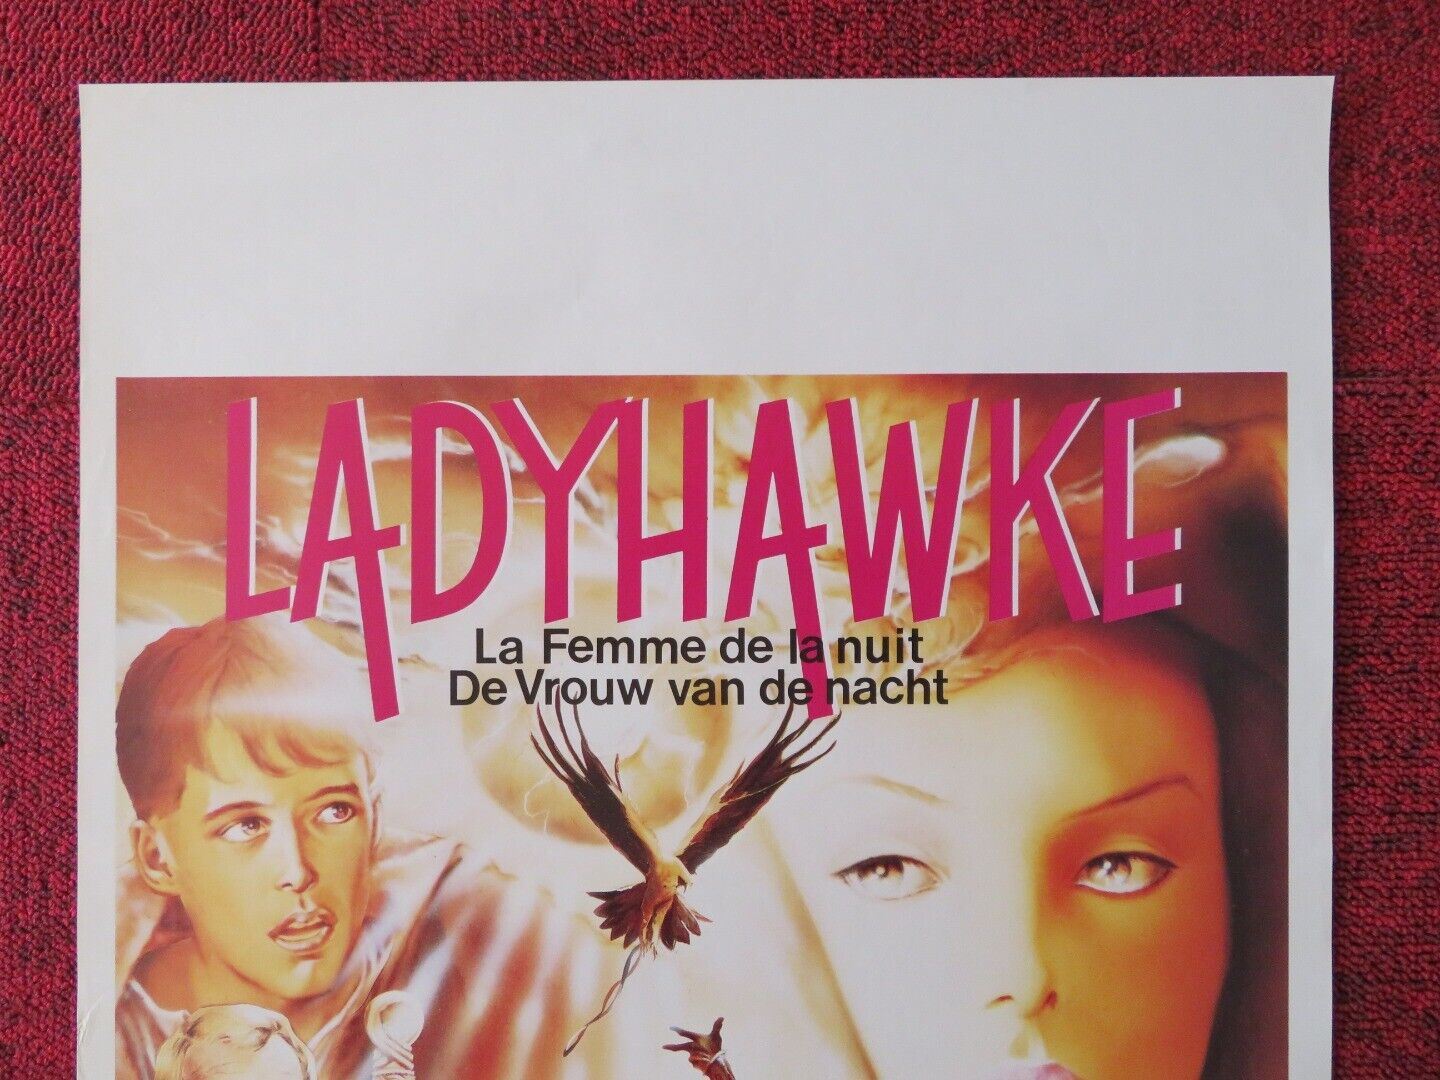 LADYHAWKE BELGIUM (21"x14") POSTER MICHELLE PFEIFFER RUTGER HAUER 1985